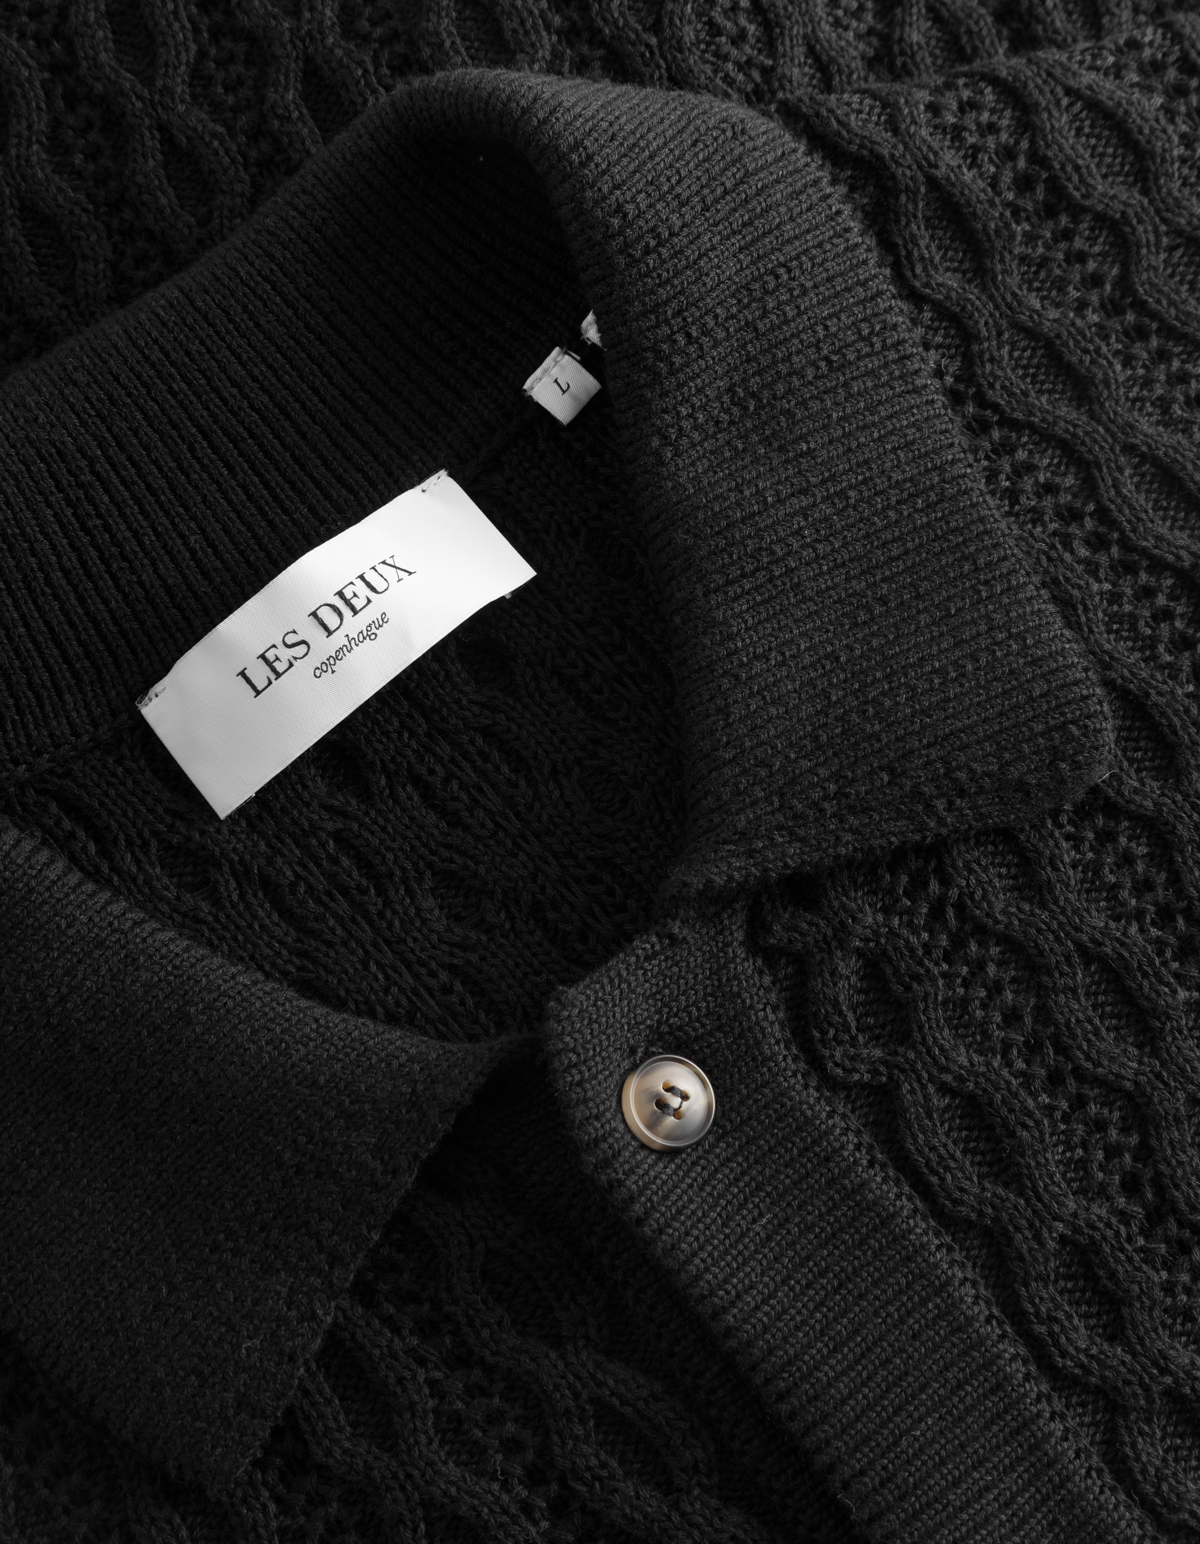 Garrett Knitted Shirt Black